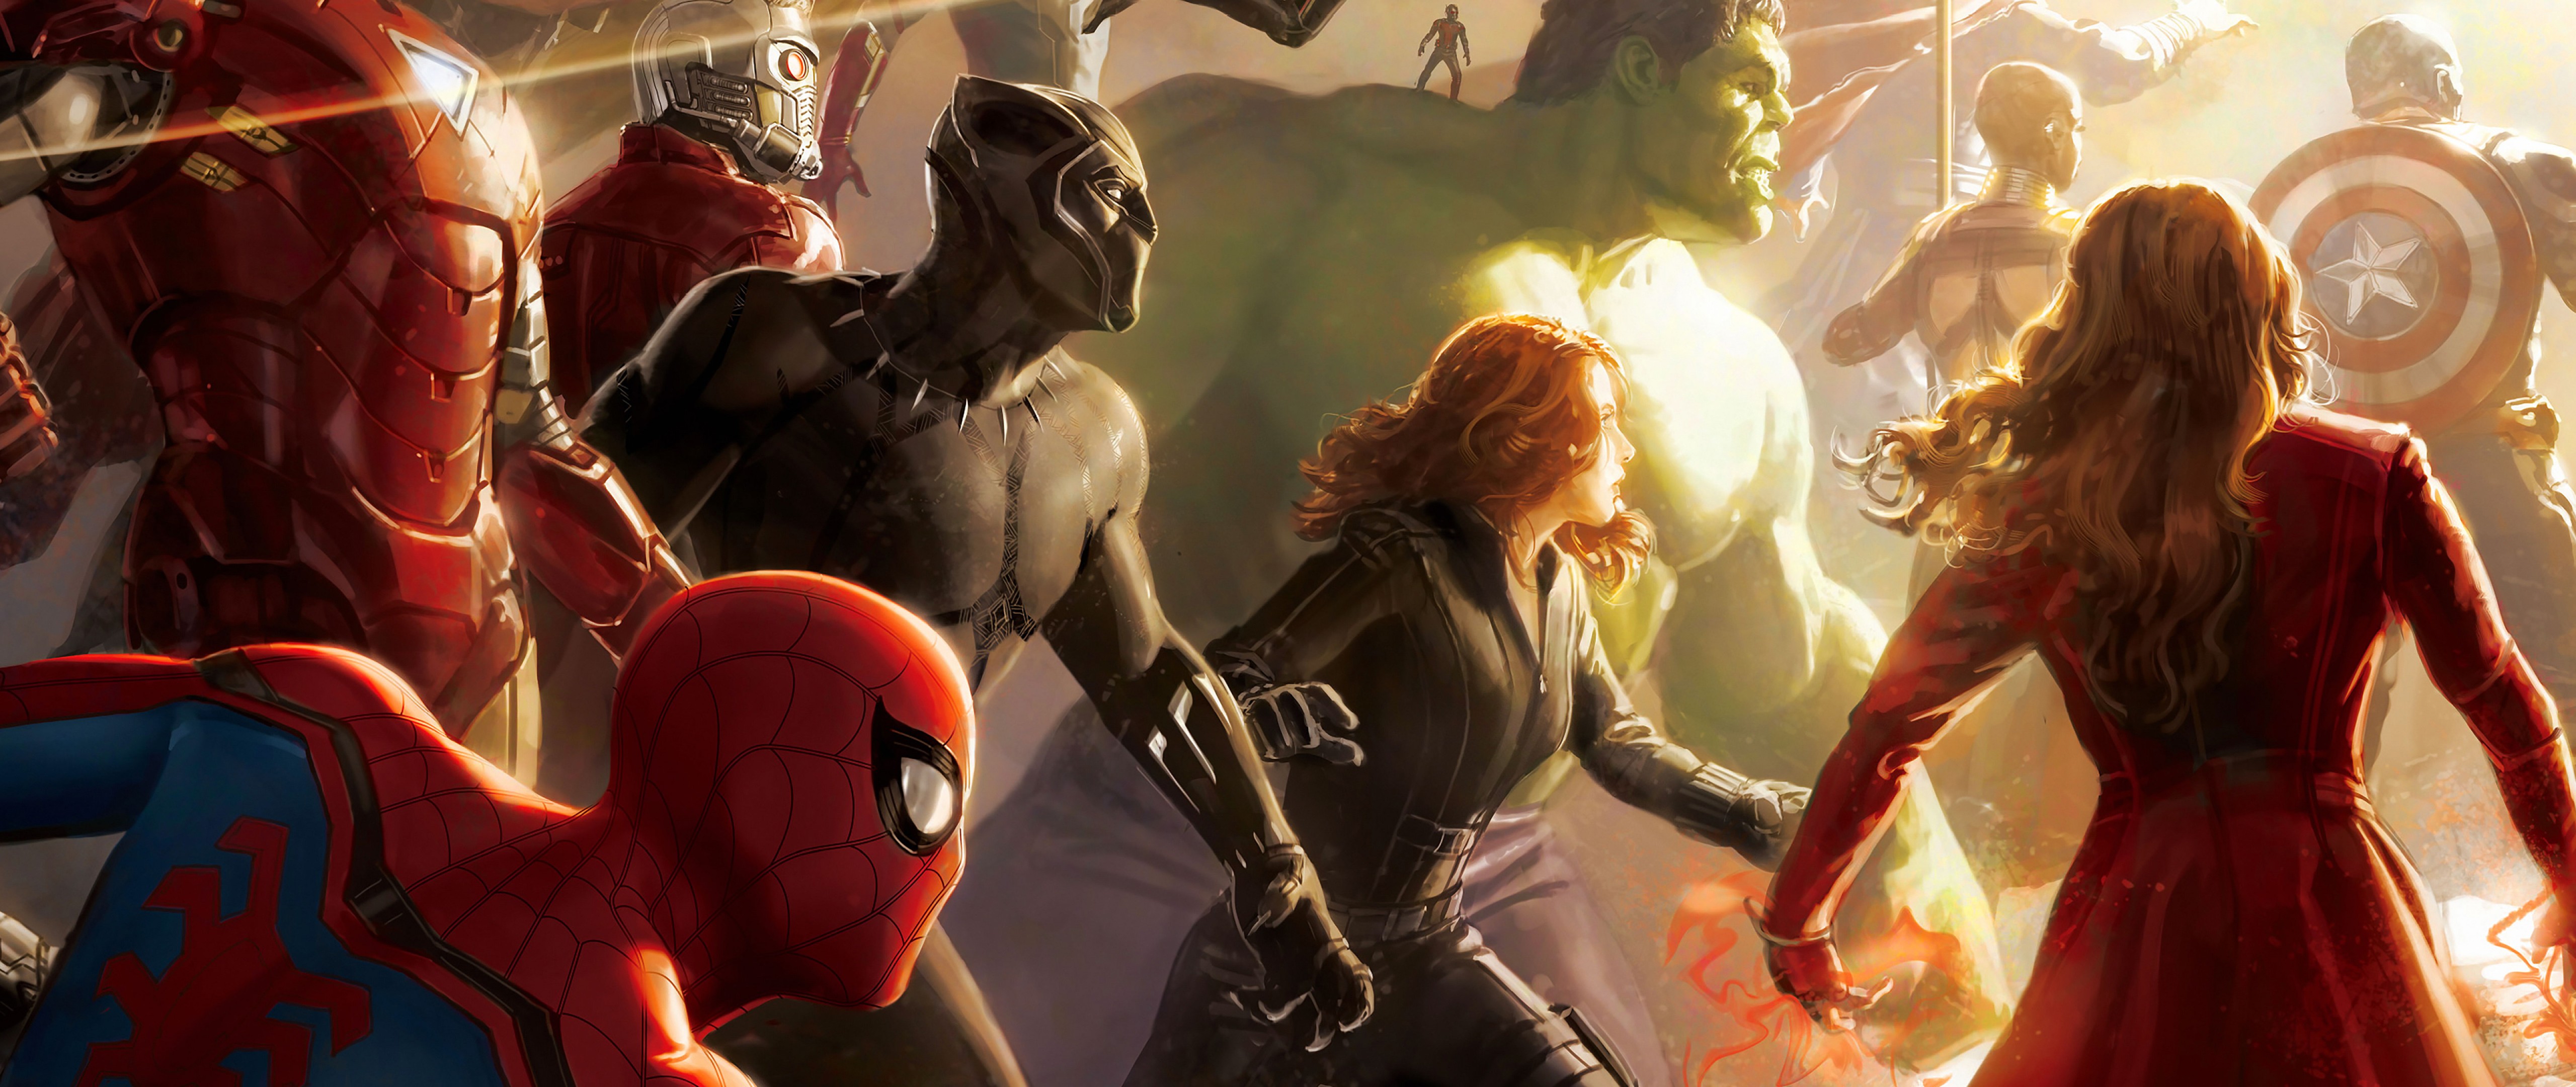 Free Download Avengers Thanos Infinity War HD Wallpaper ...